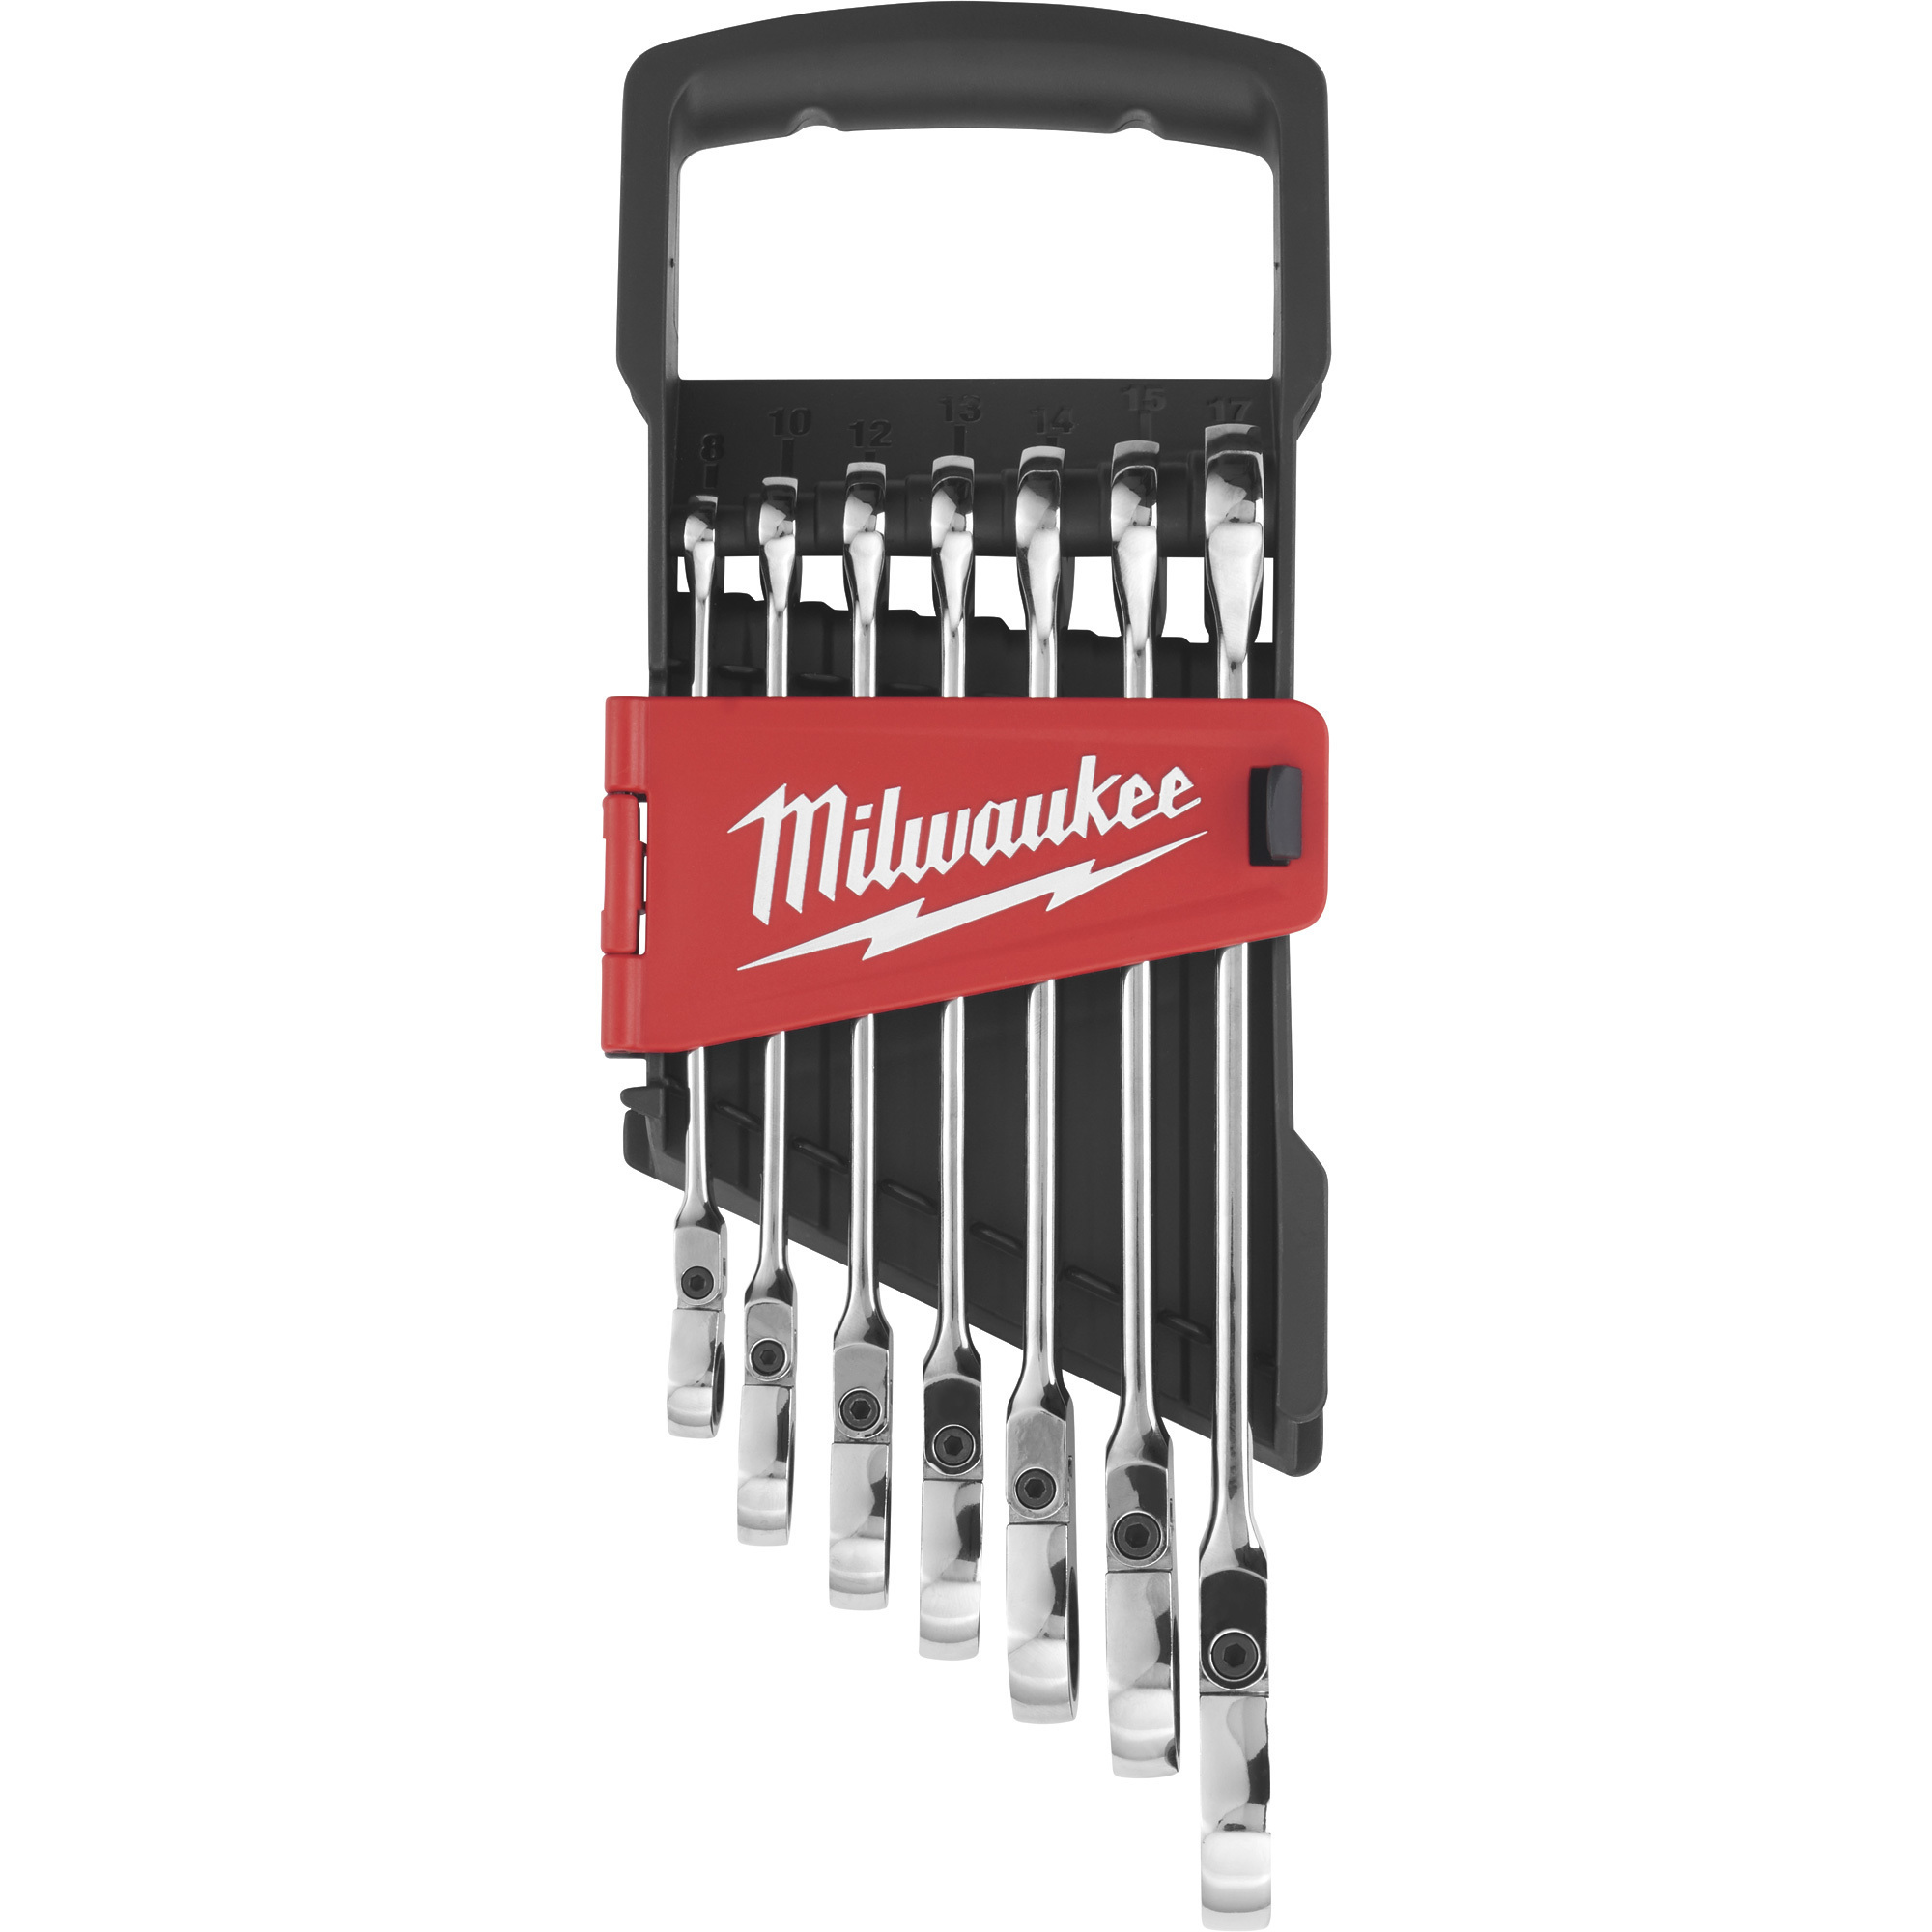 Milwaukee Flex Head Ratcheting Combination Wrench Set, 7-Piece, Metric, Model 48-22-9529